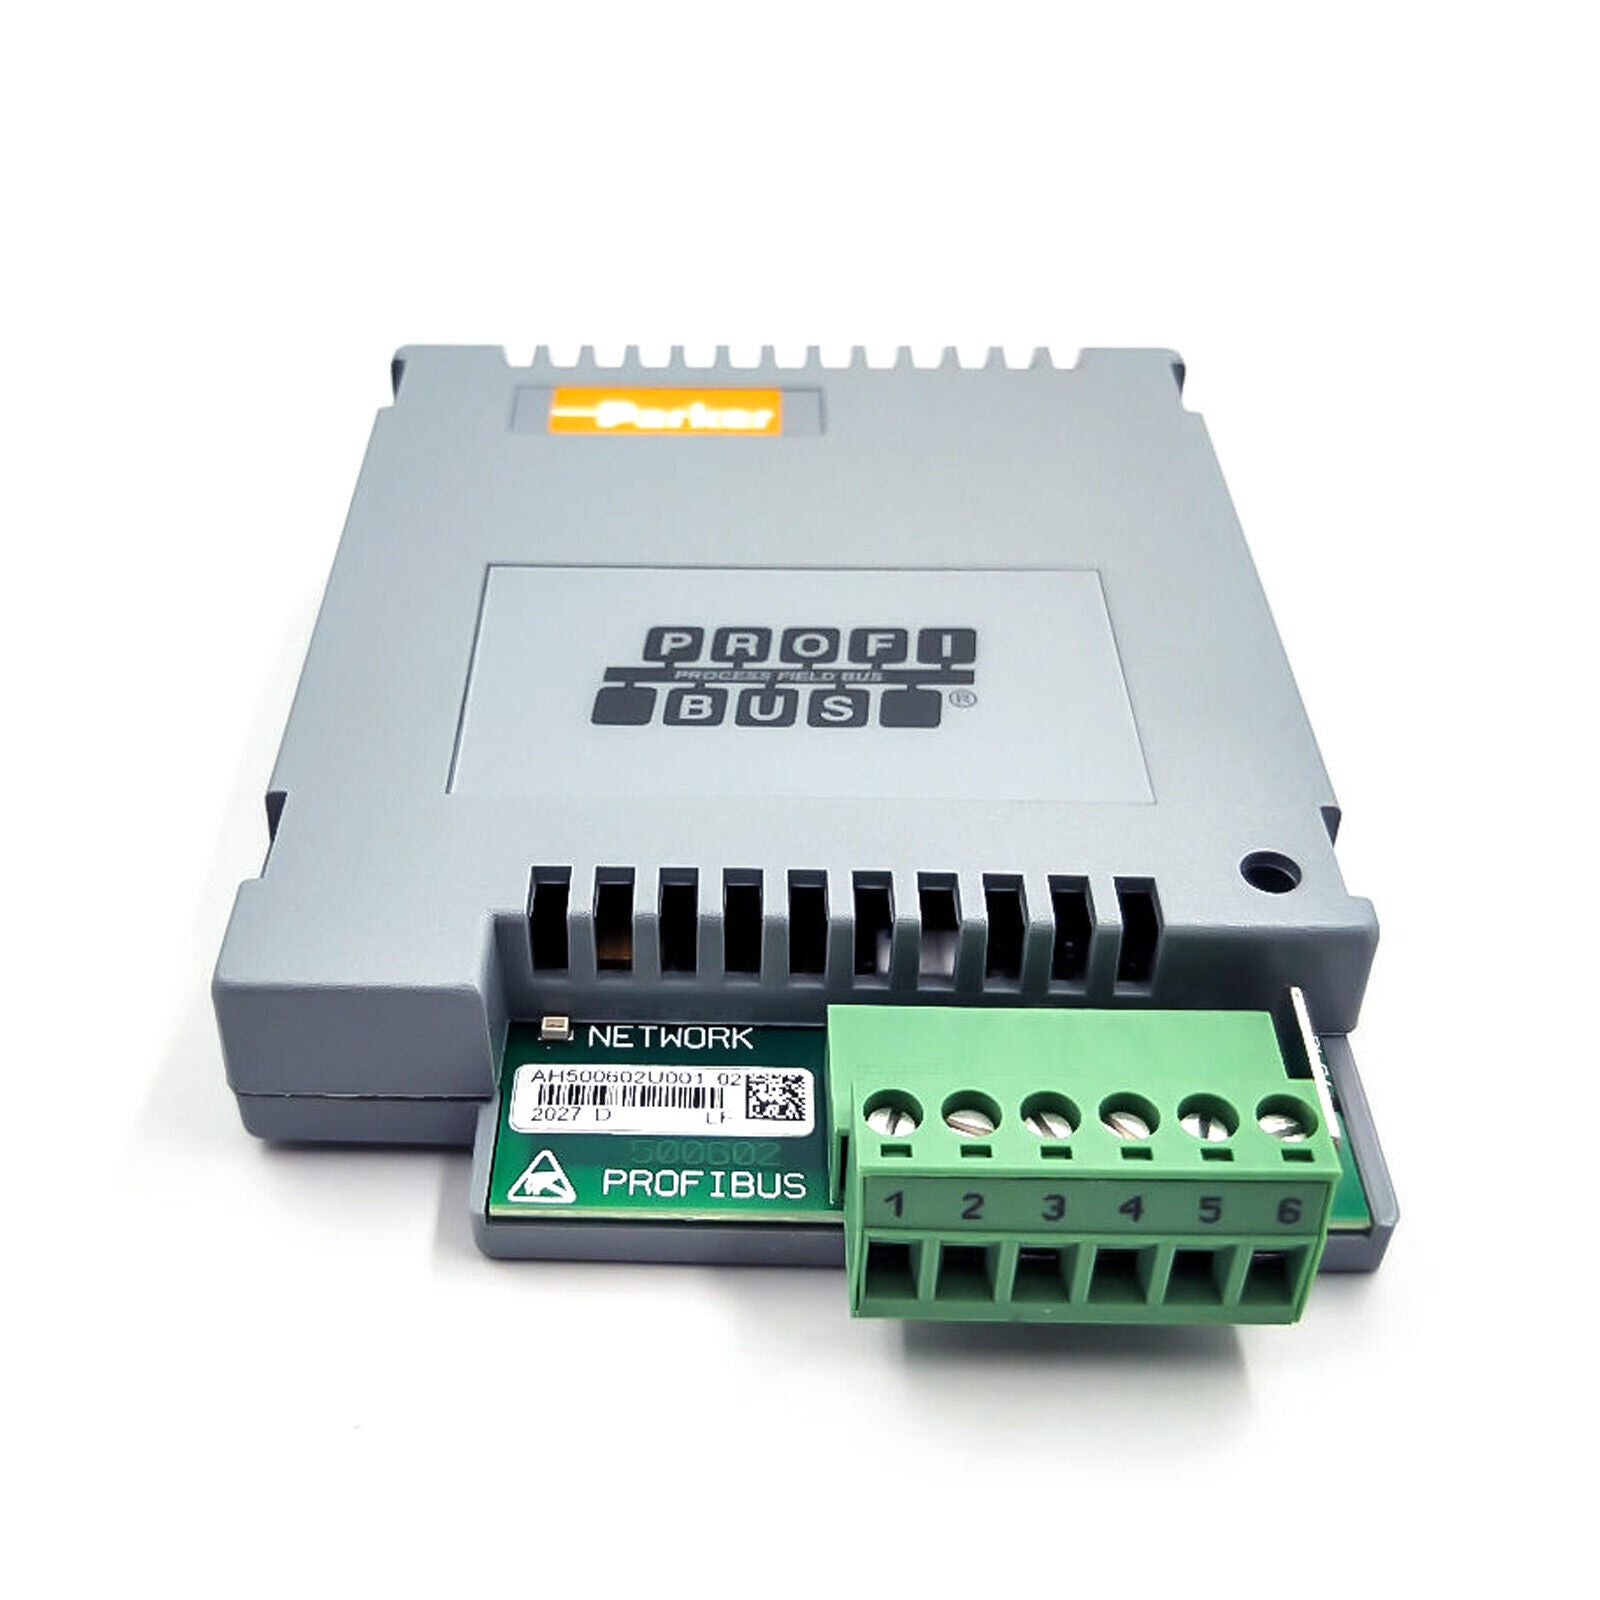 new  PARKER 6055-PROF-00 AH500602U001 Communication Board